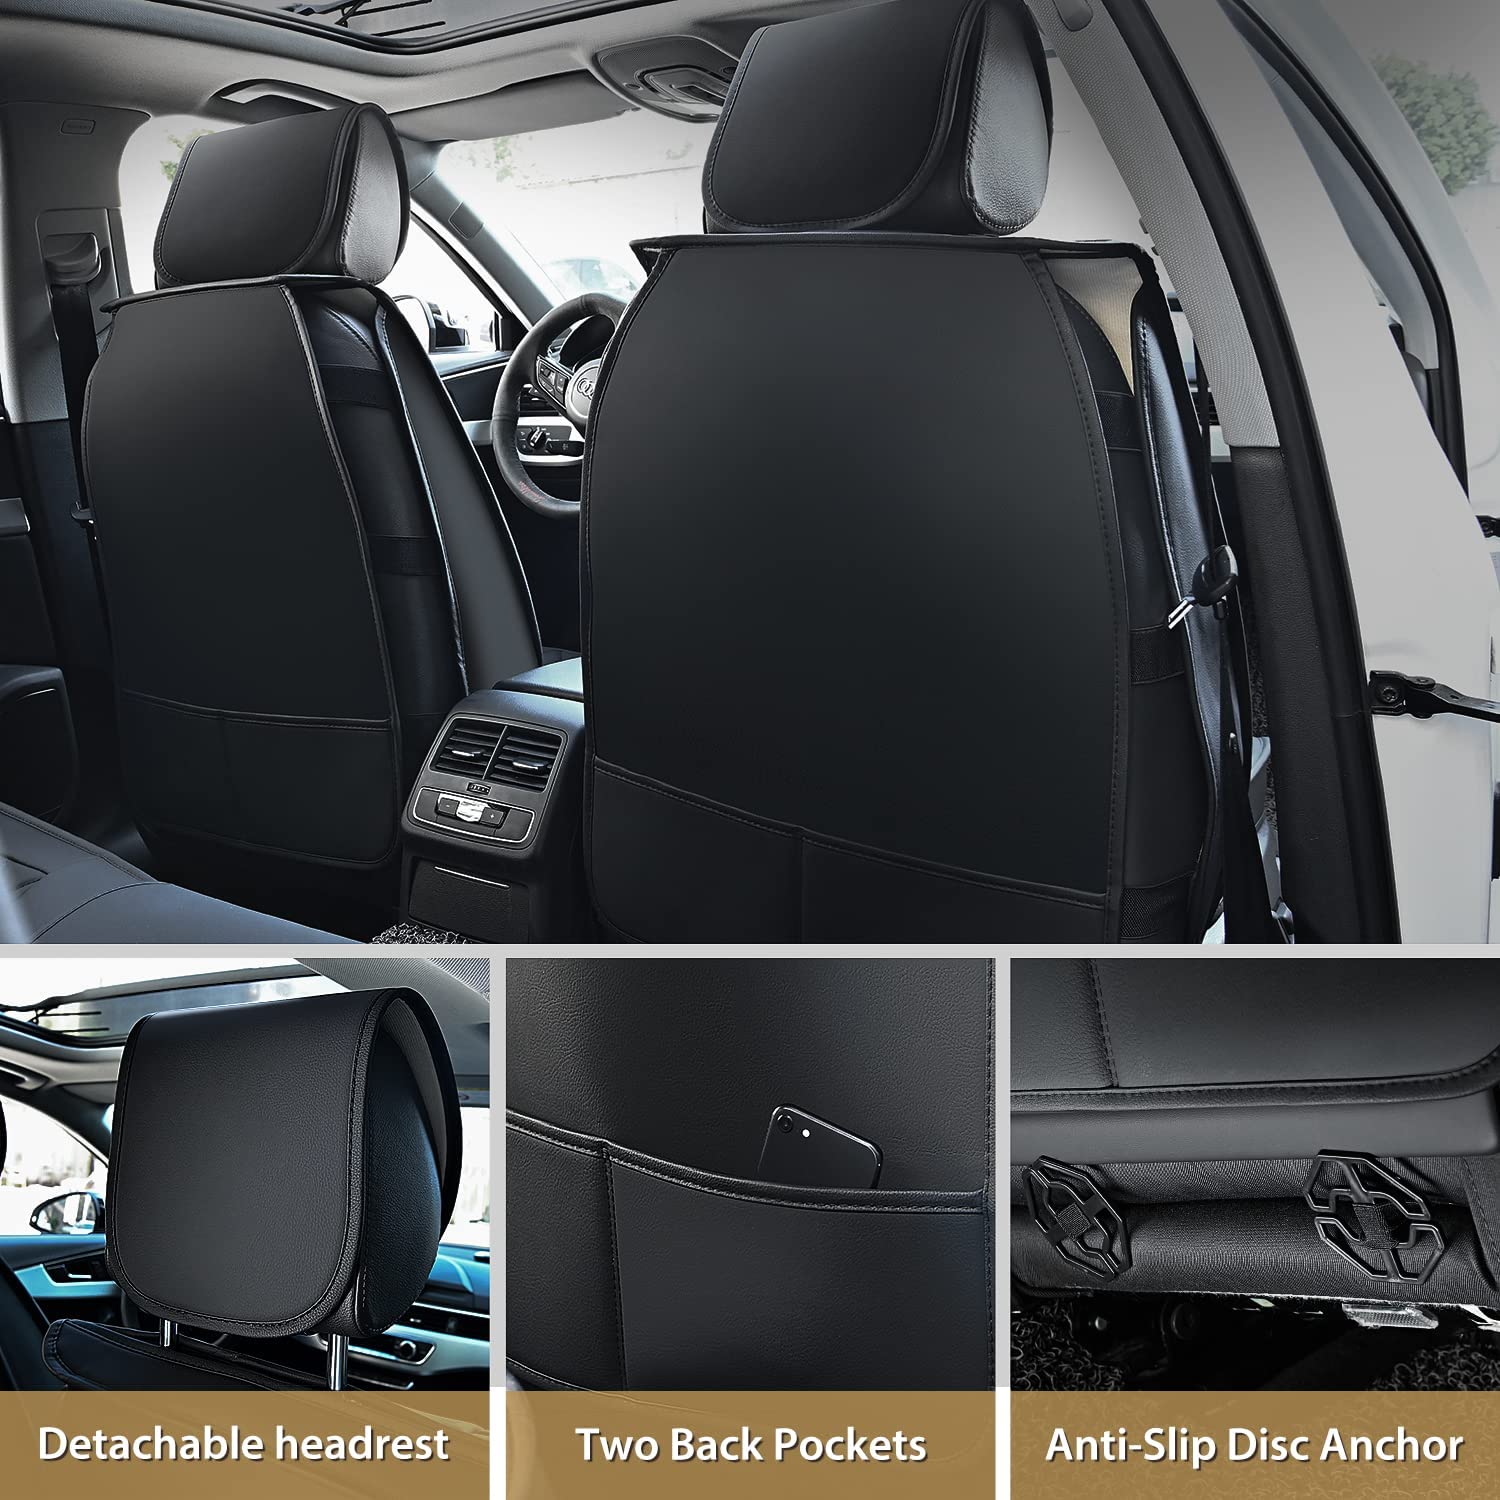 Hyundai Honda Accord Kia Civic Corolla Camry CRV RAV4 Fusion 5 Seat Covers (Full Set, Black) Nilight